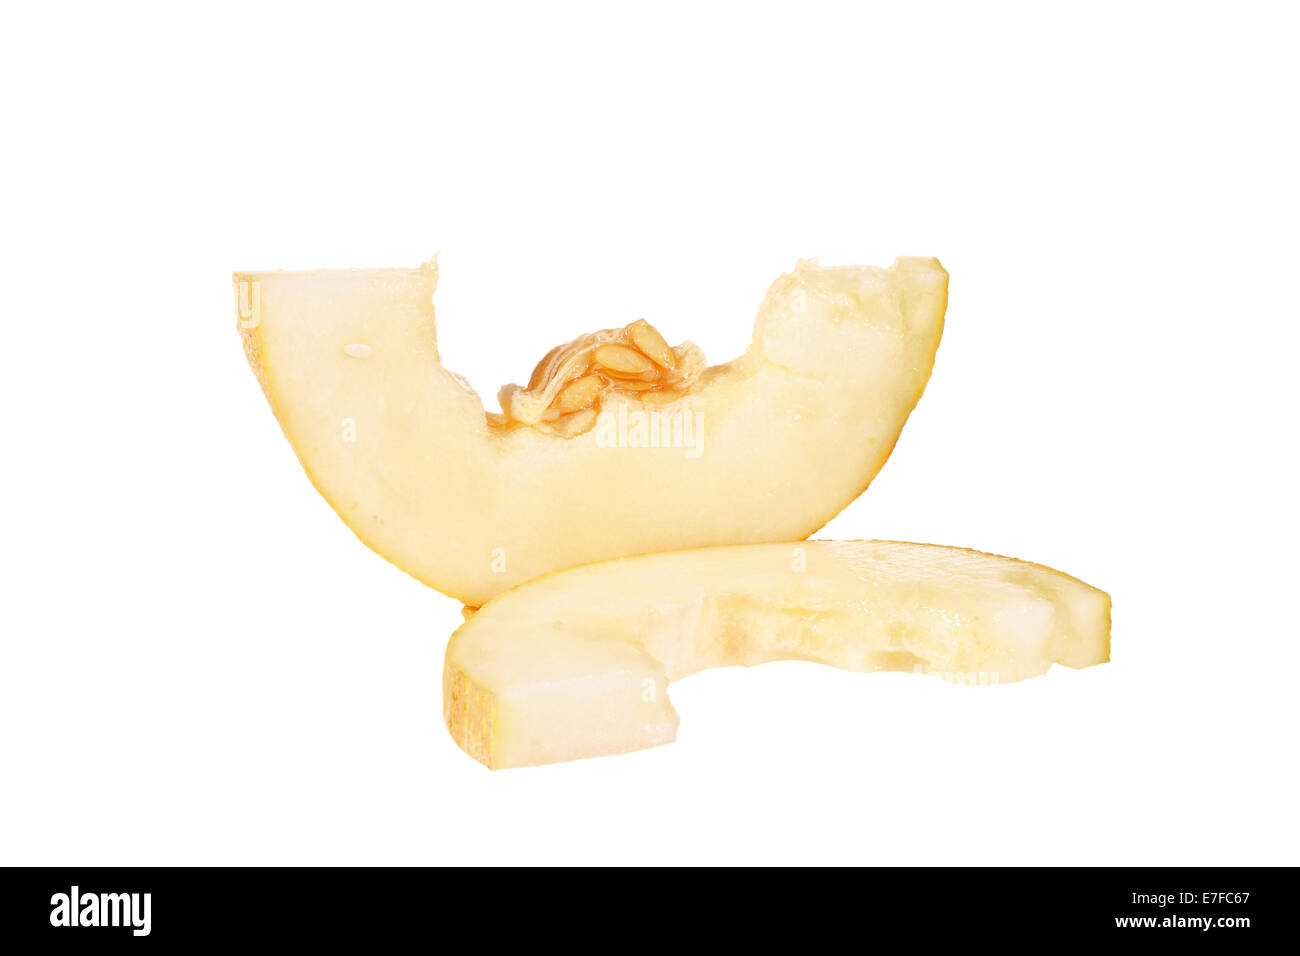 Melon slices isolated on white background Stock Photo